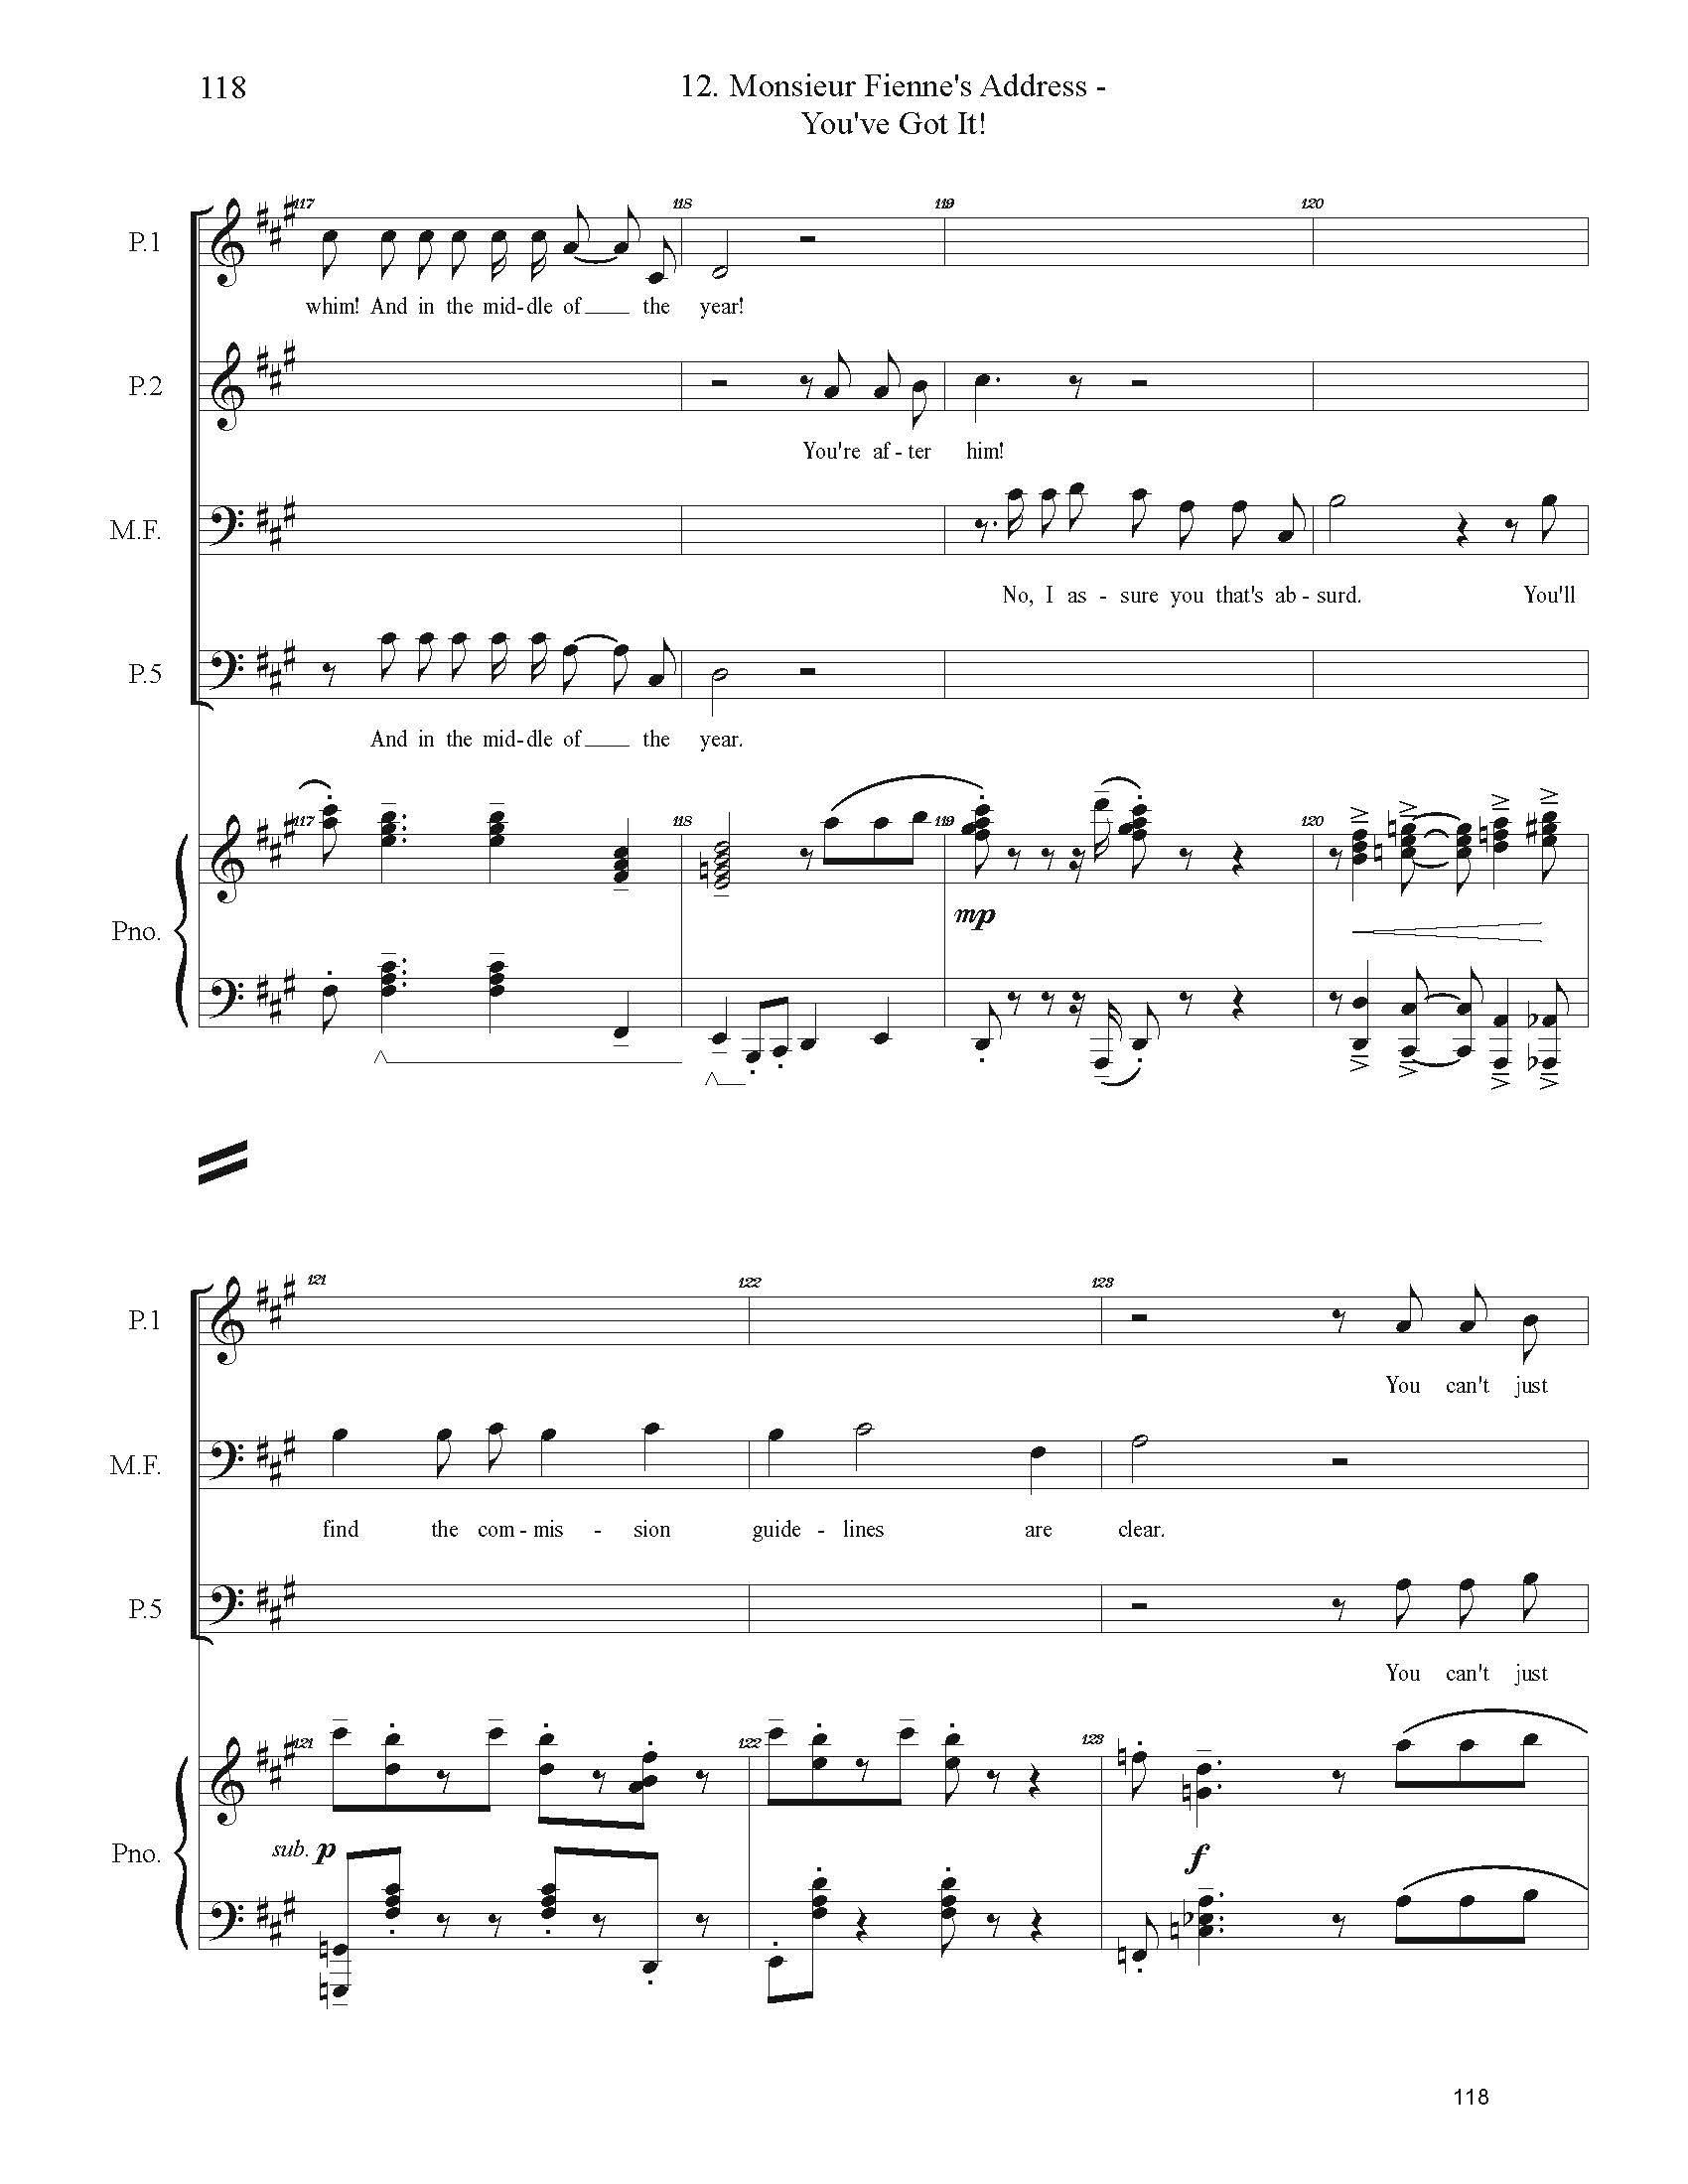 FULL PIANO VOCAL SCORE DRAFT 1 - Score_Page_118.jpg